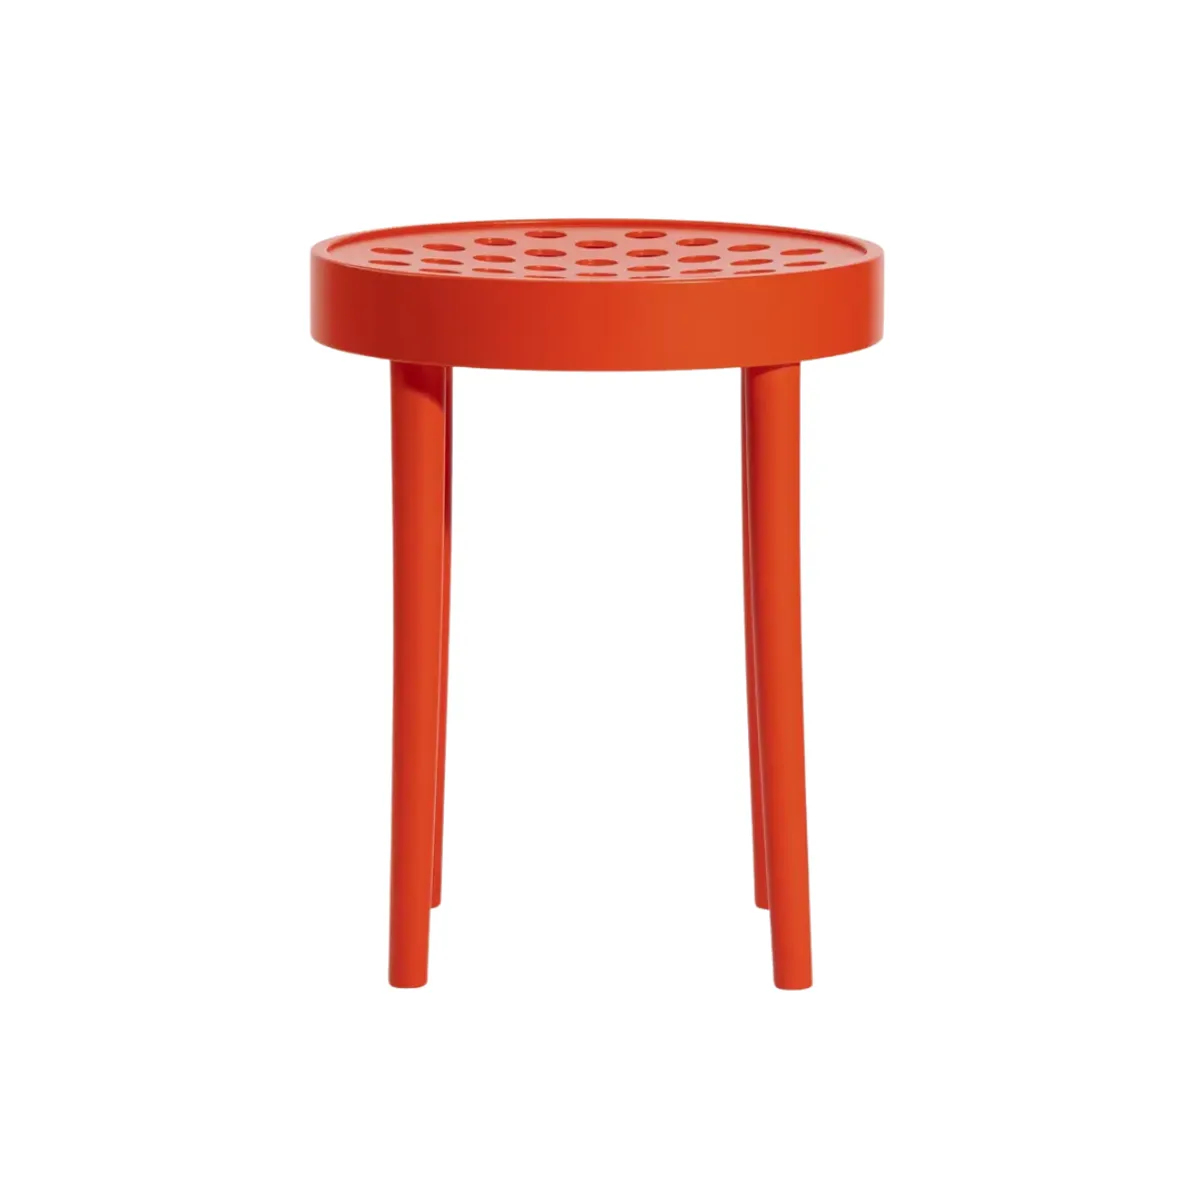 Max low stool 4